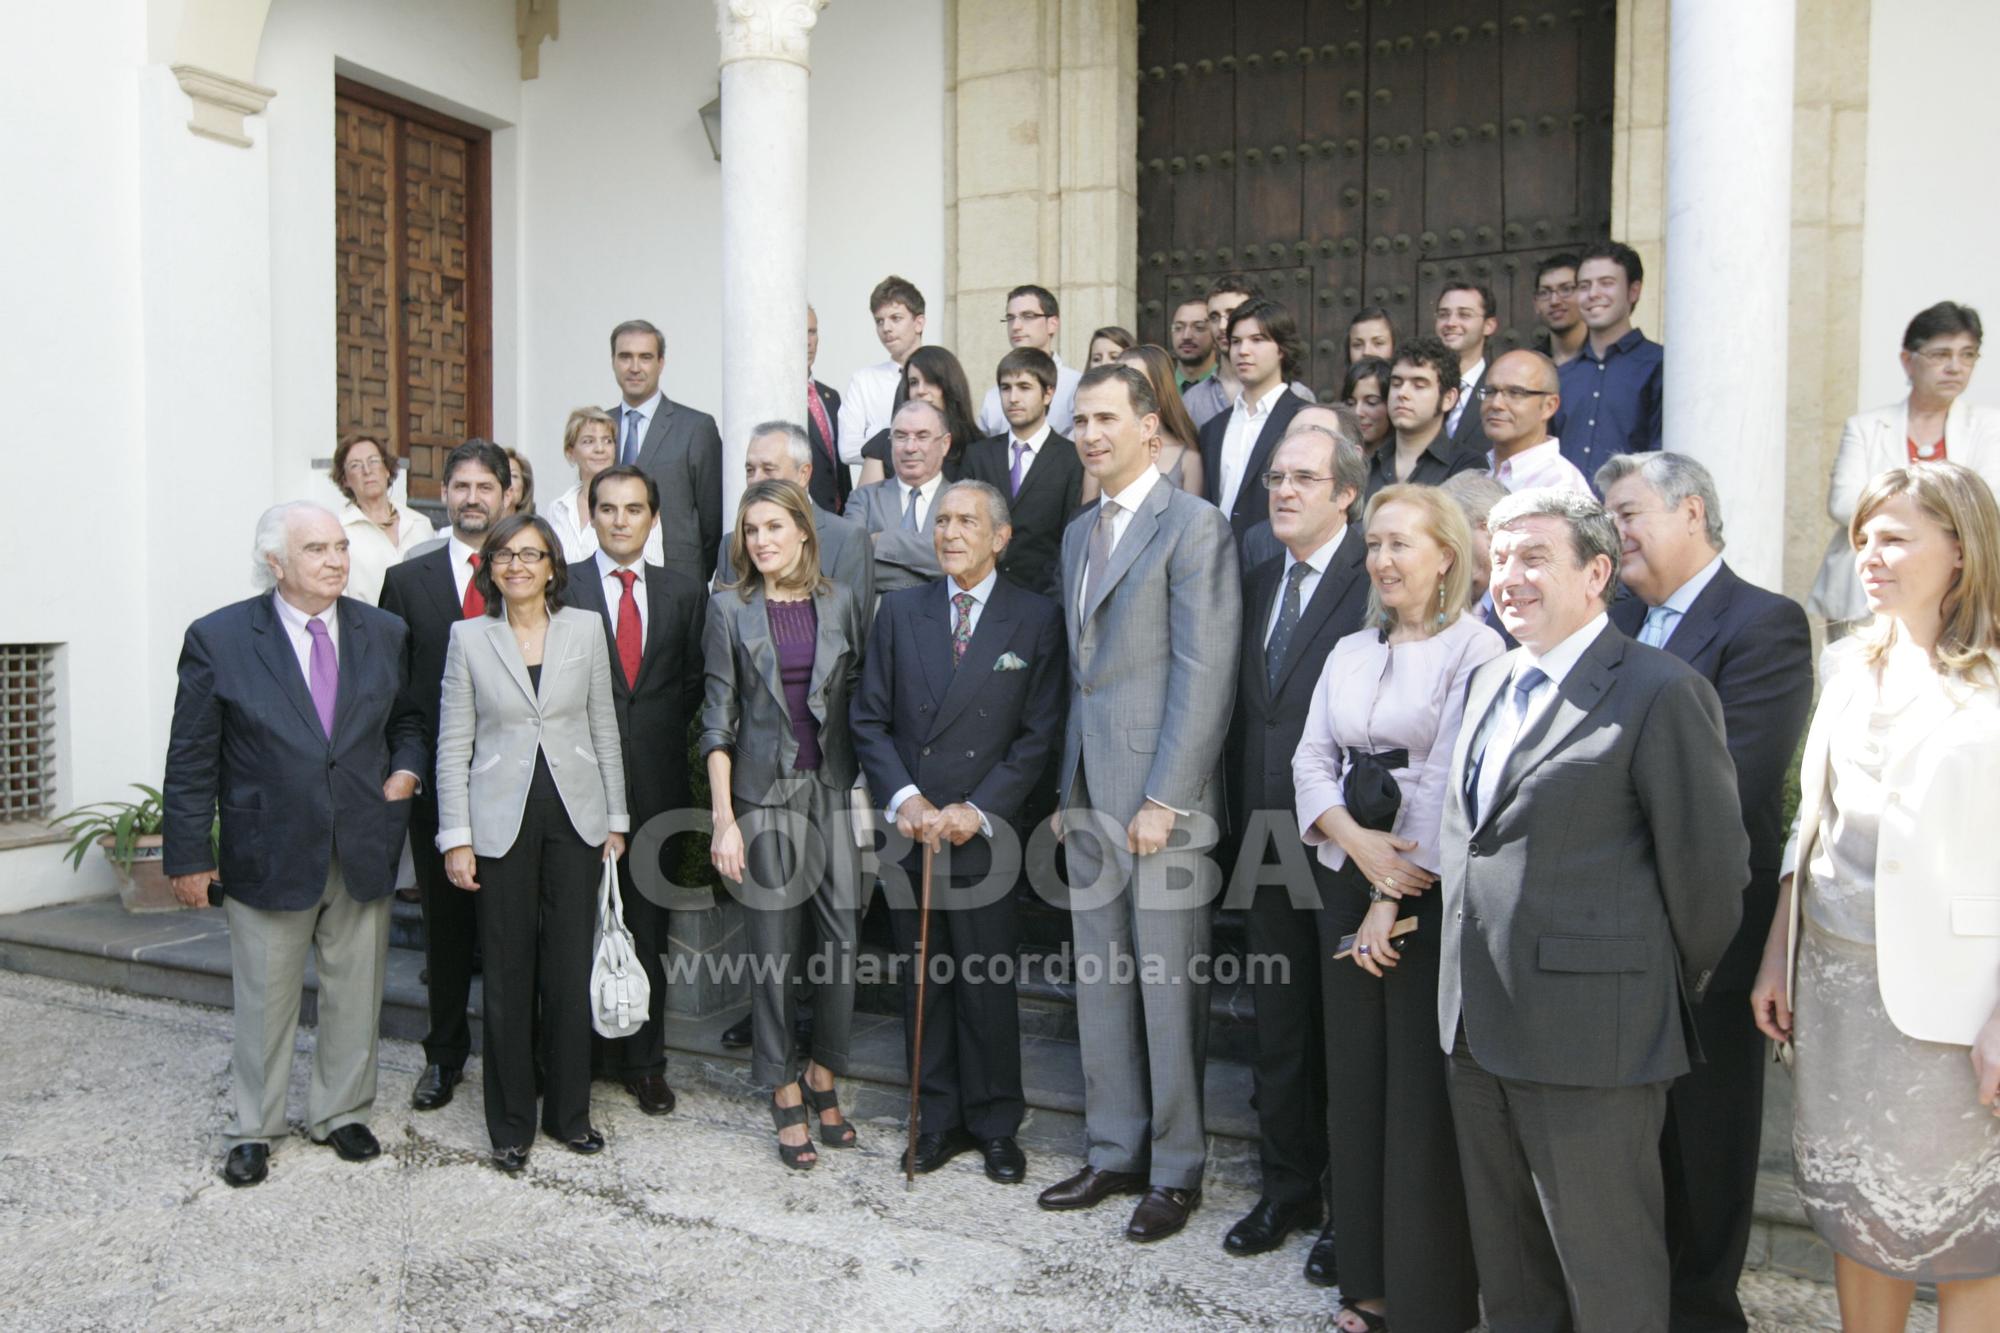 2011 los principes de asturias visitan la fundacion AJ (2).jpg